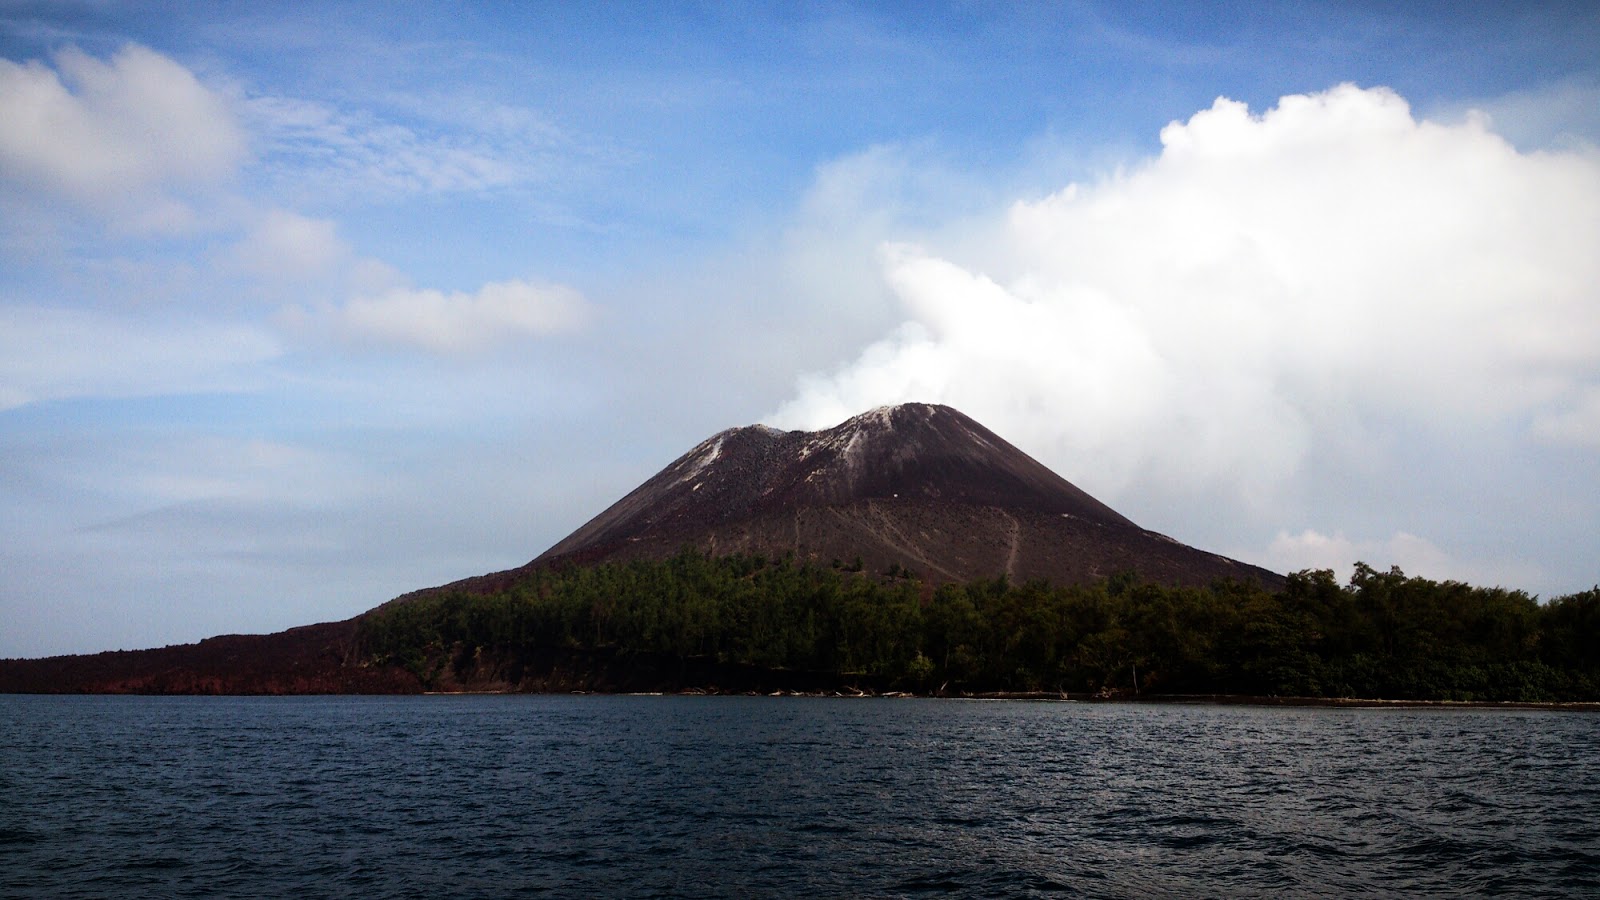 Sirip Kecil: Son of Mount Krakatau Expedition